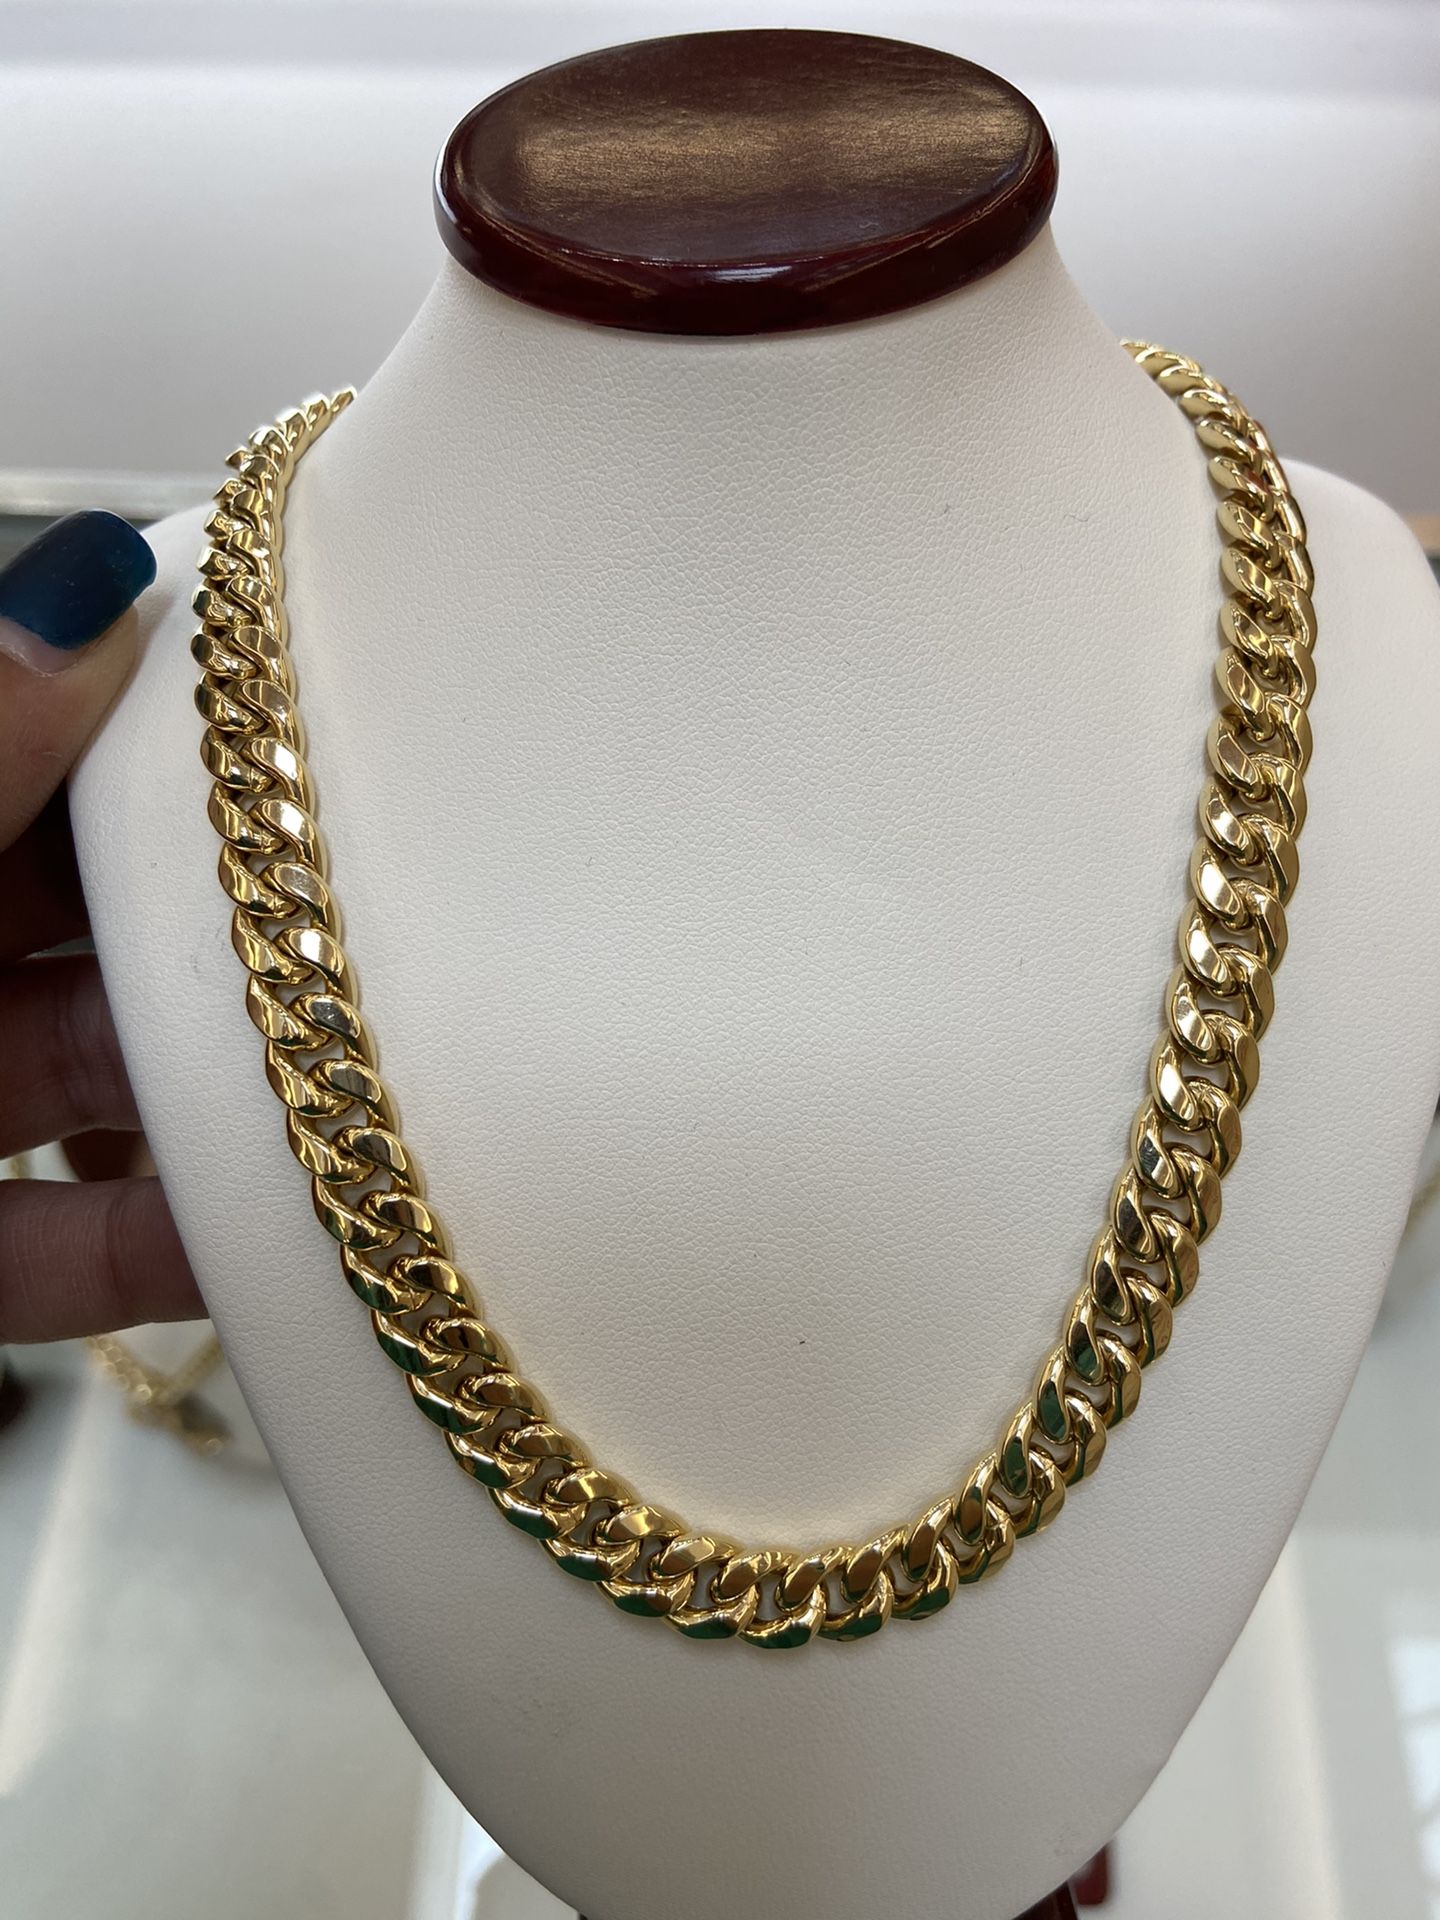 10k gold Miami Cuban chain, 46 grams